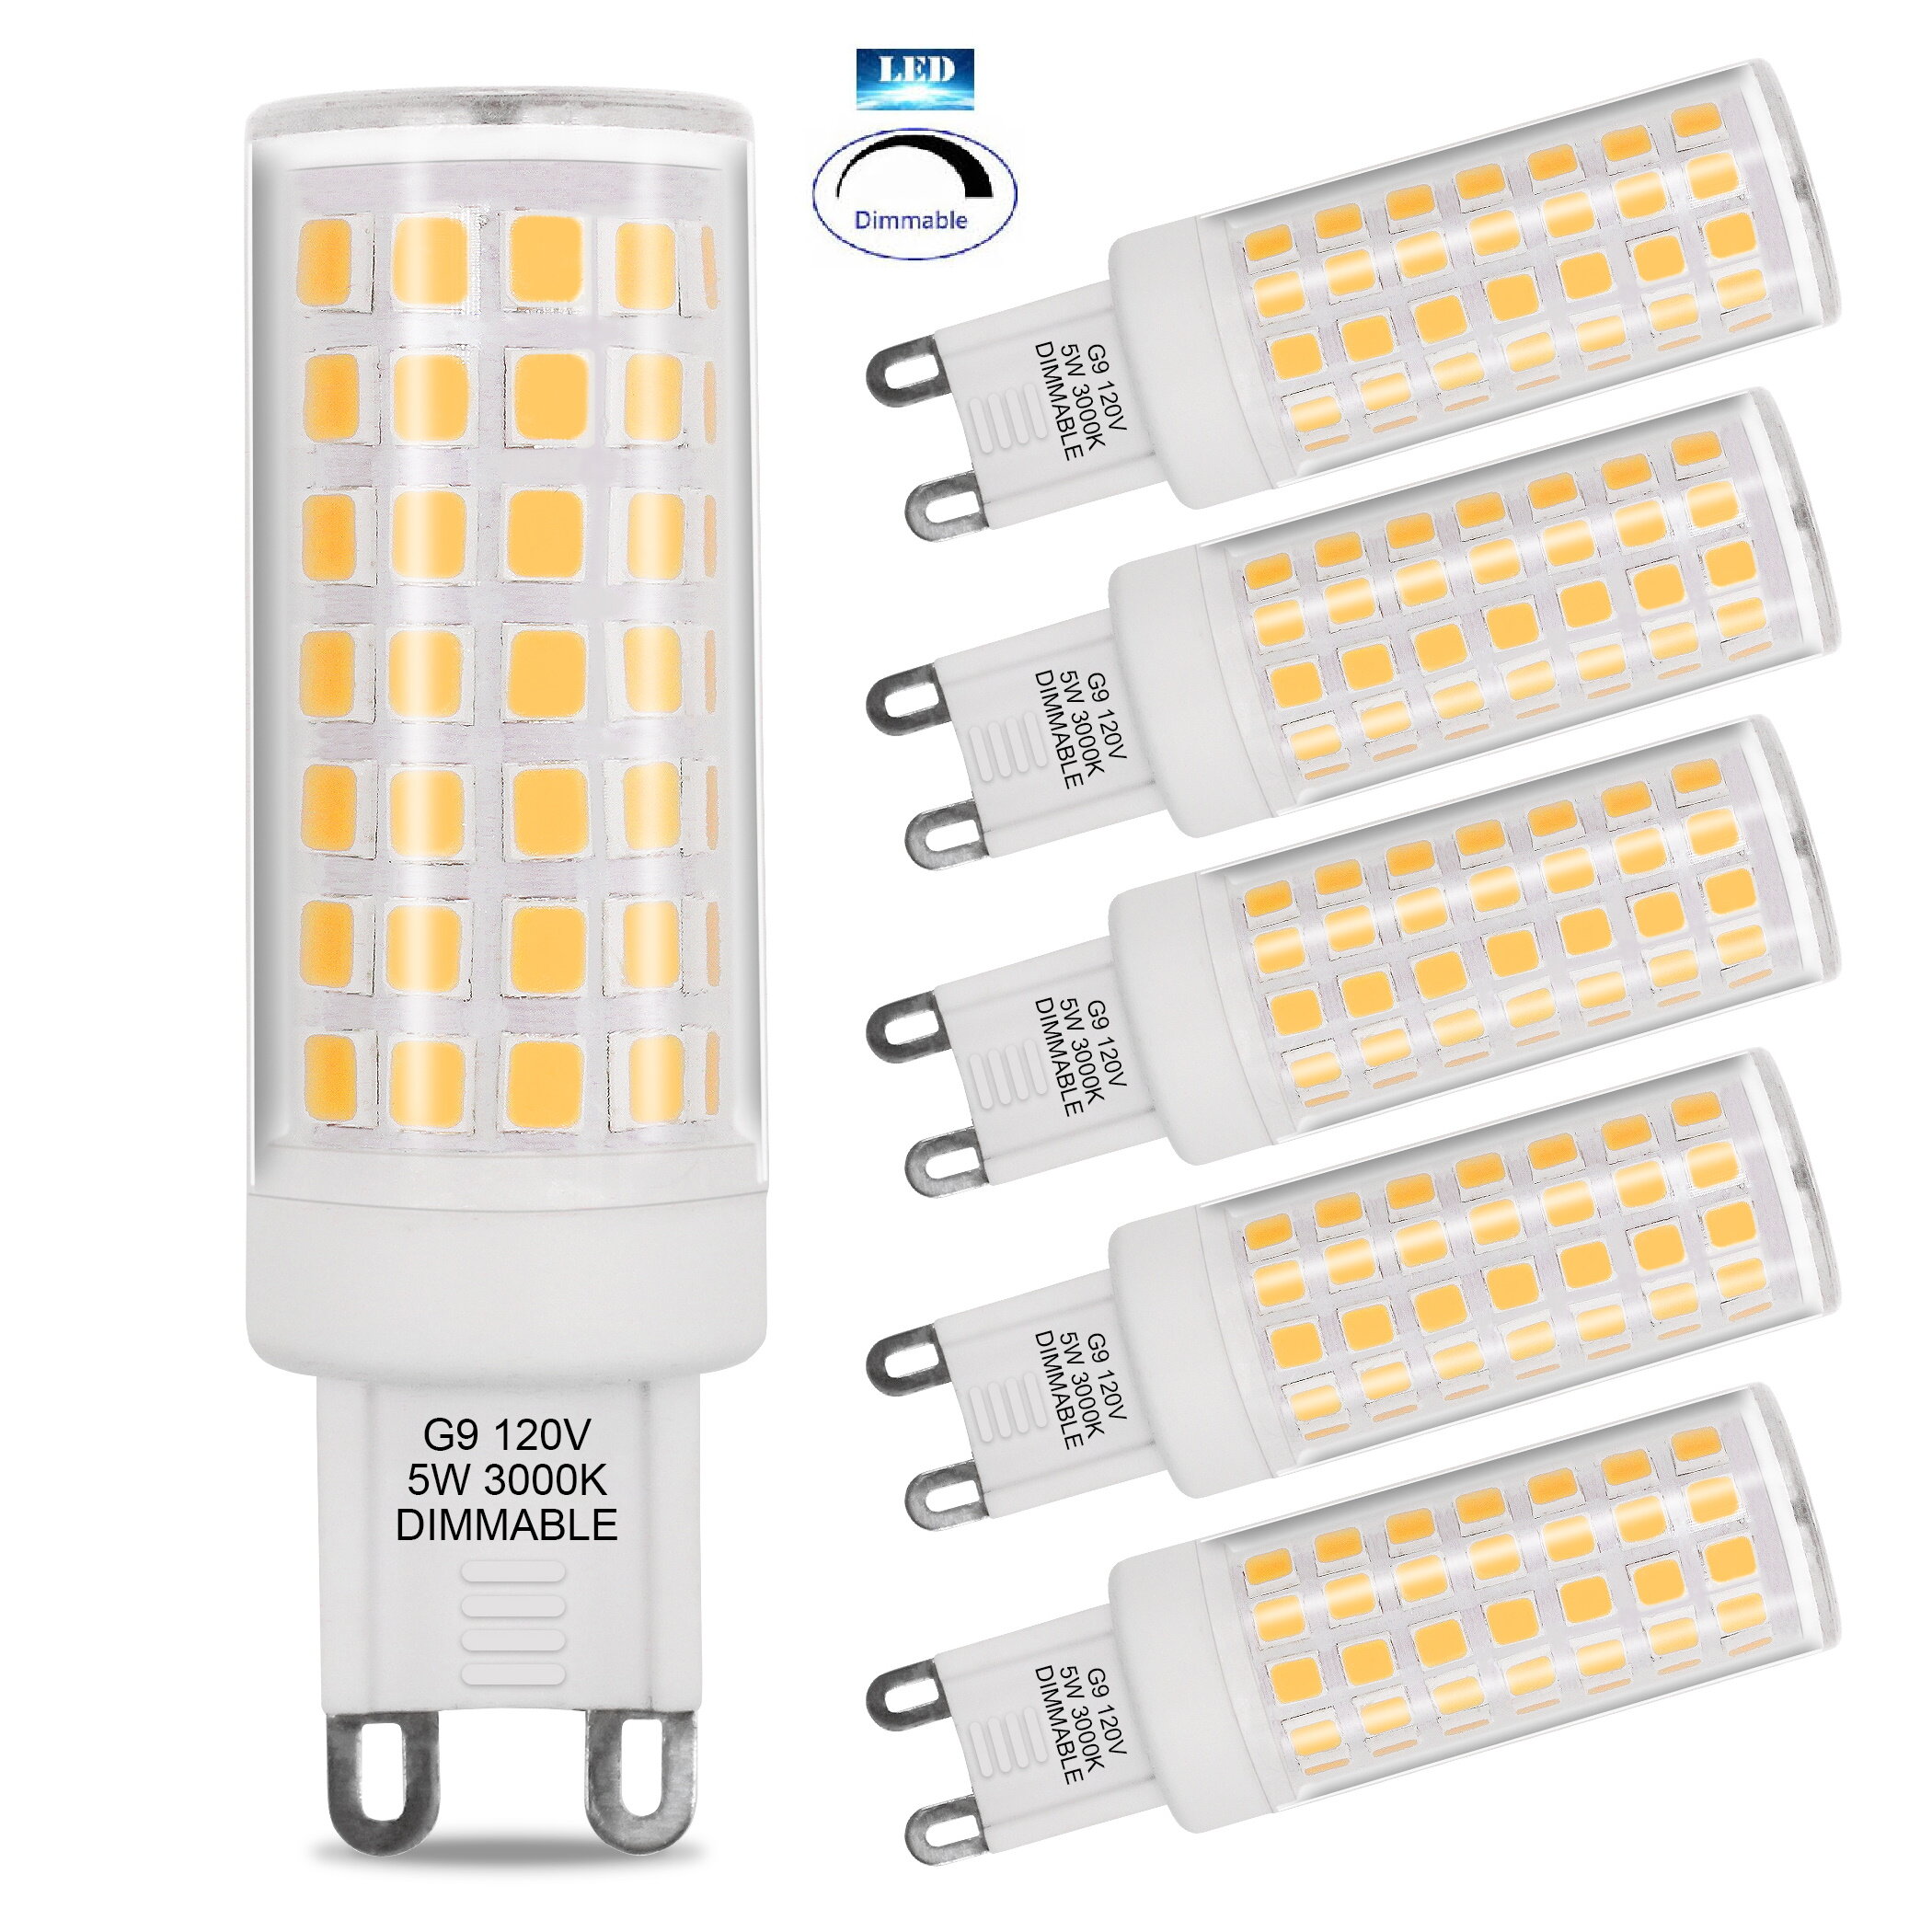 Non-dimmable G9 Base Bulbs G9 Ceramic Base LED Light Bulbs 4W Warm White 3000K G9 Warm White Bulbs for Home Lighting 40W Halogen Equivalent 450LM 5 Pack 